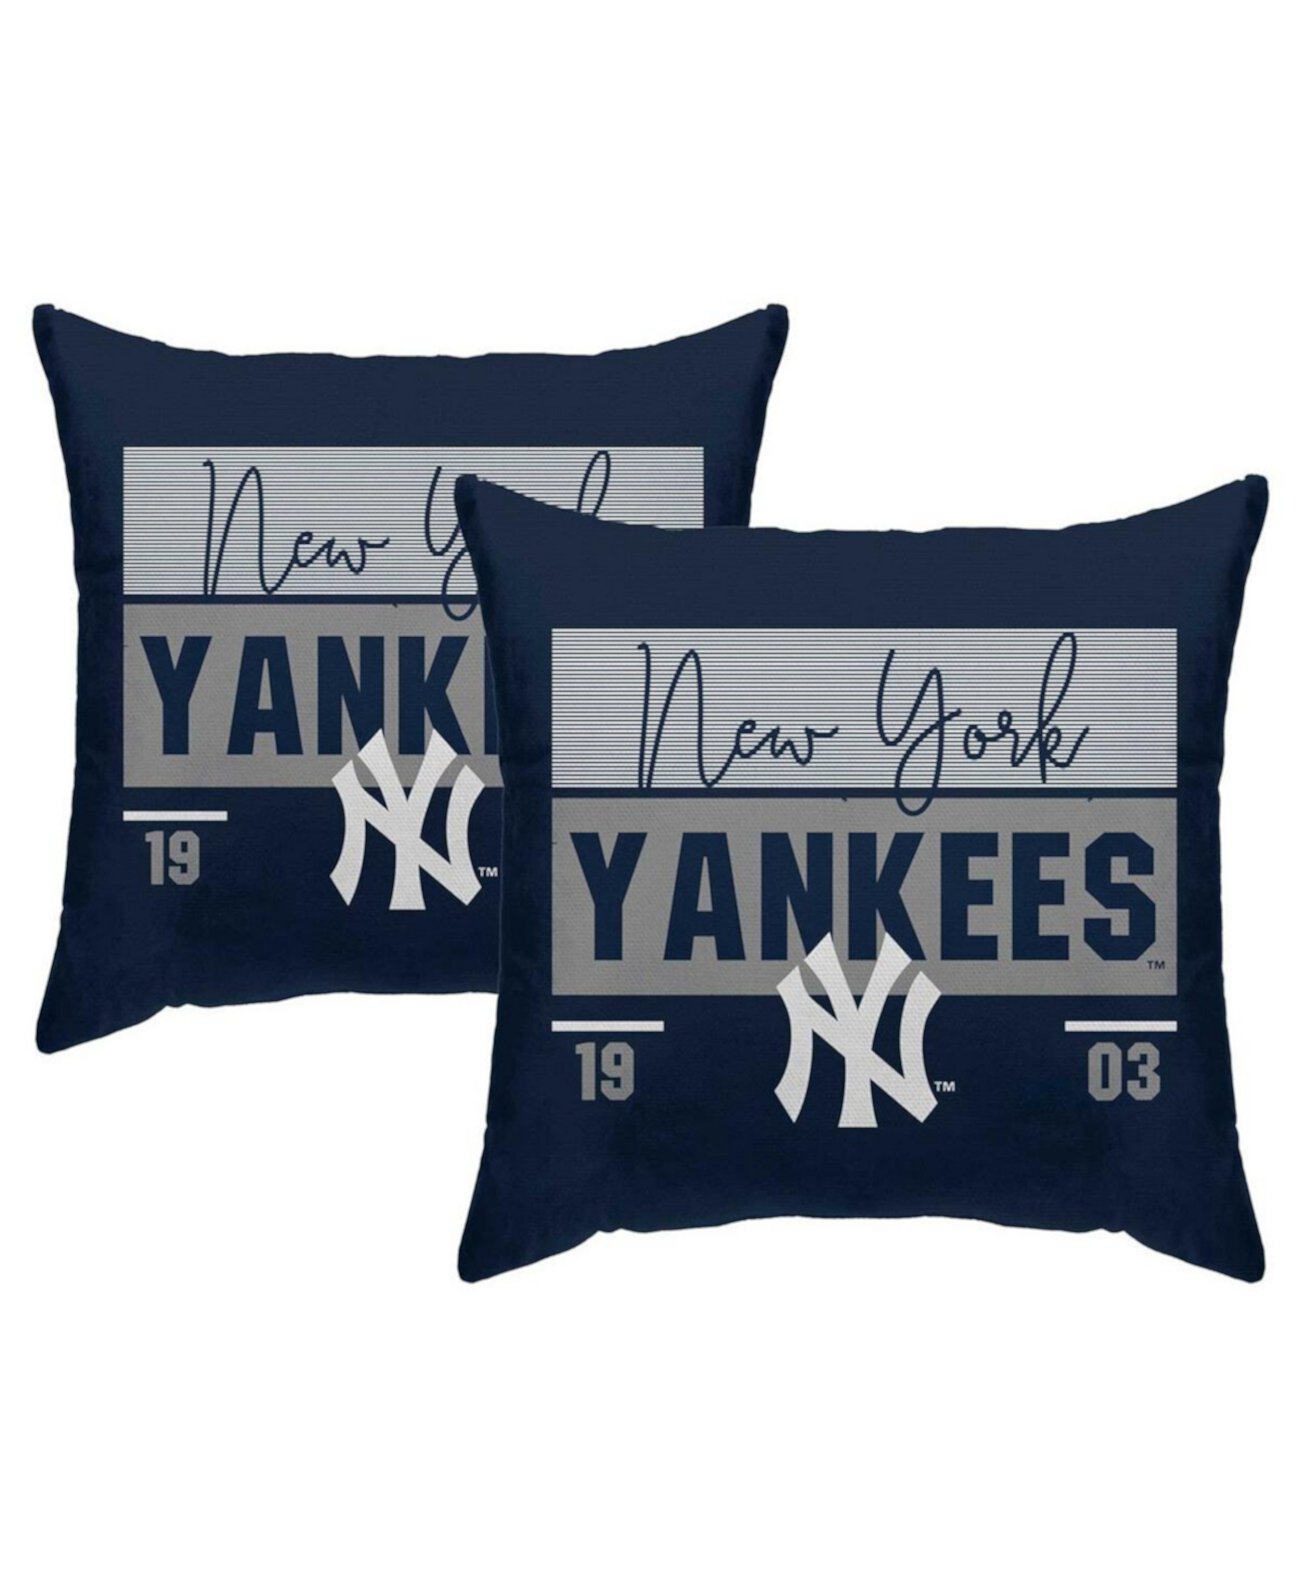 Чехлы на подушки с тканевым декором Pegasus New York Yankees размером 18 x 18 дюймов Pegasus Home Fashions